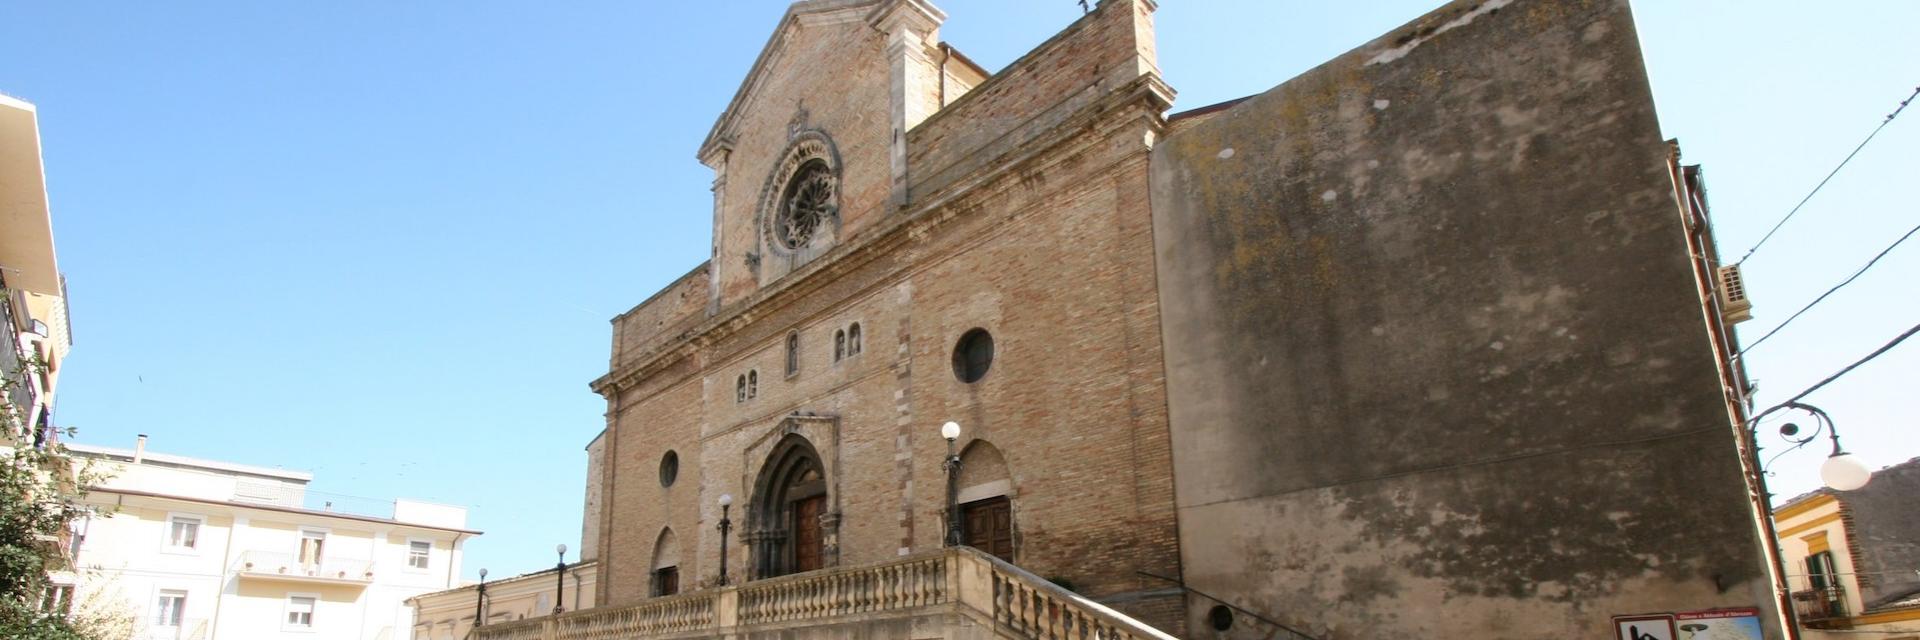 Chiesa di San Leucio